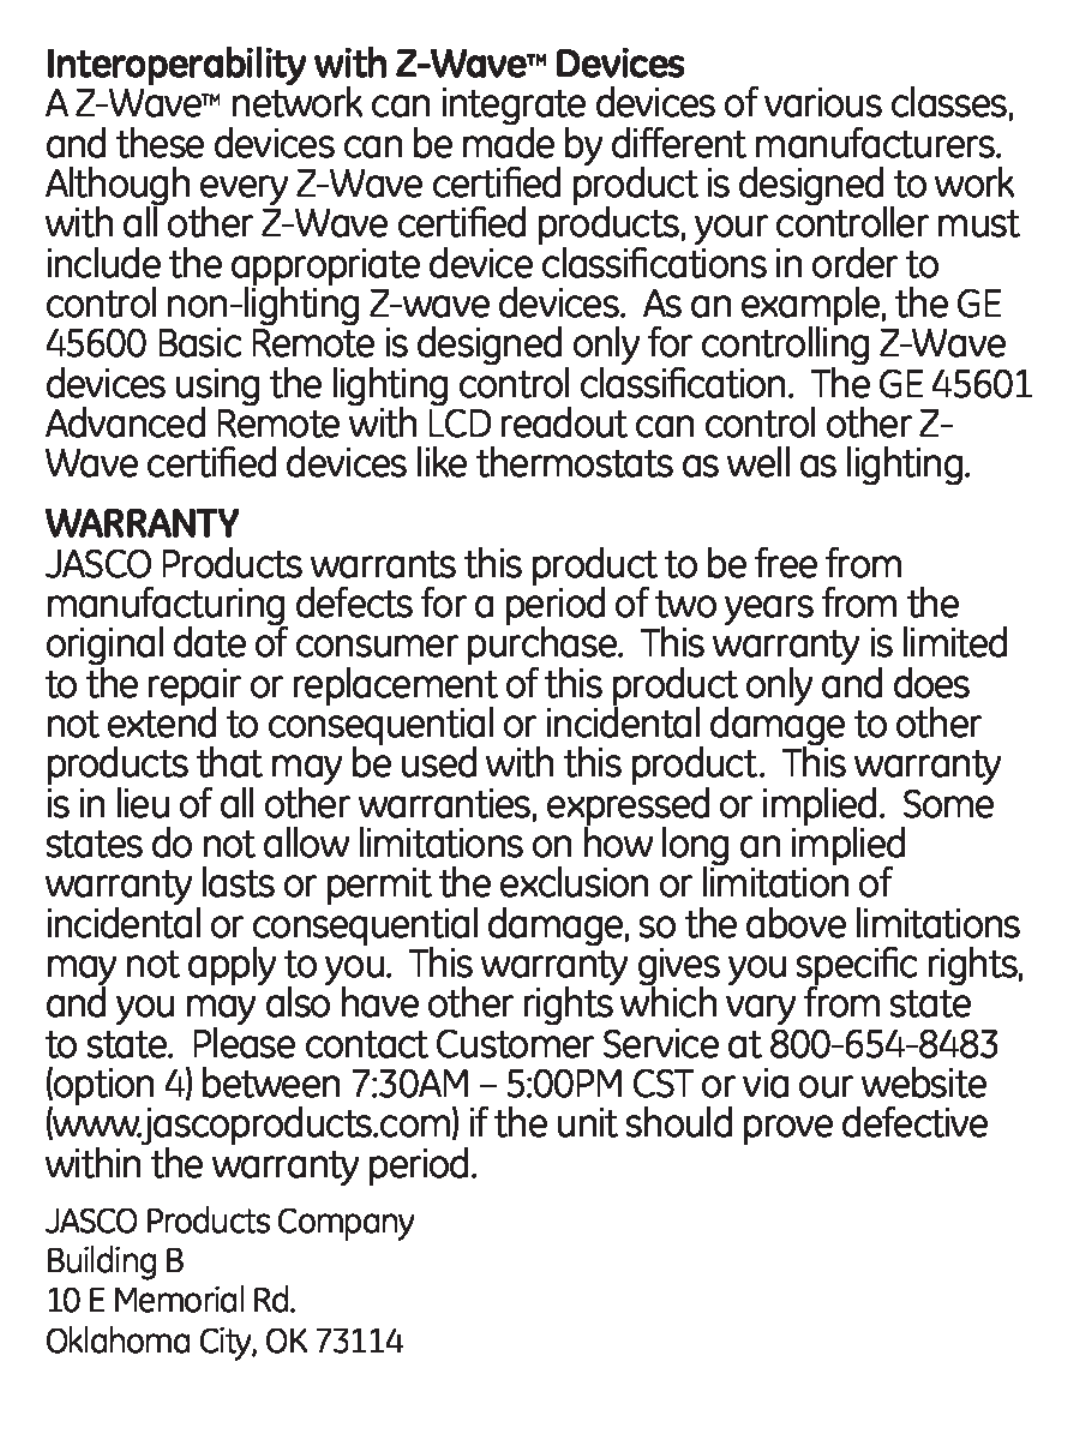 GE 45602 manual Interoperability with Z-Wave Devices, Warranty 